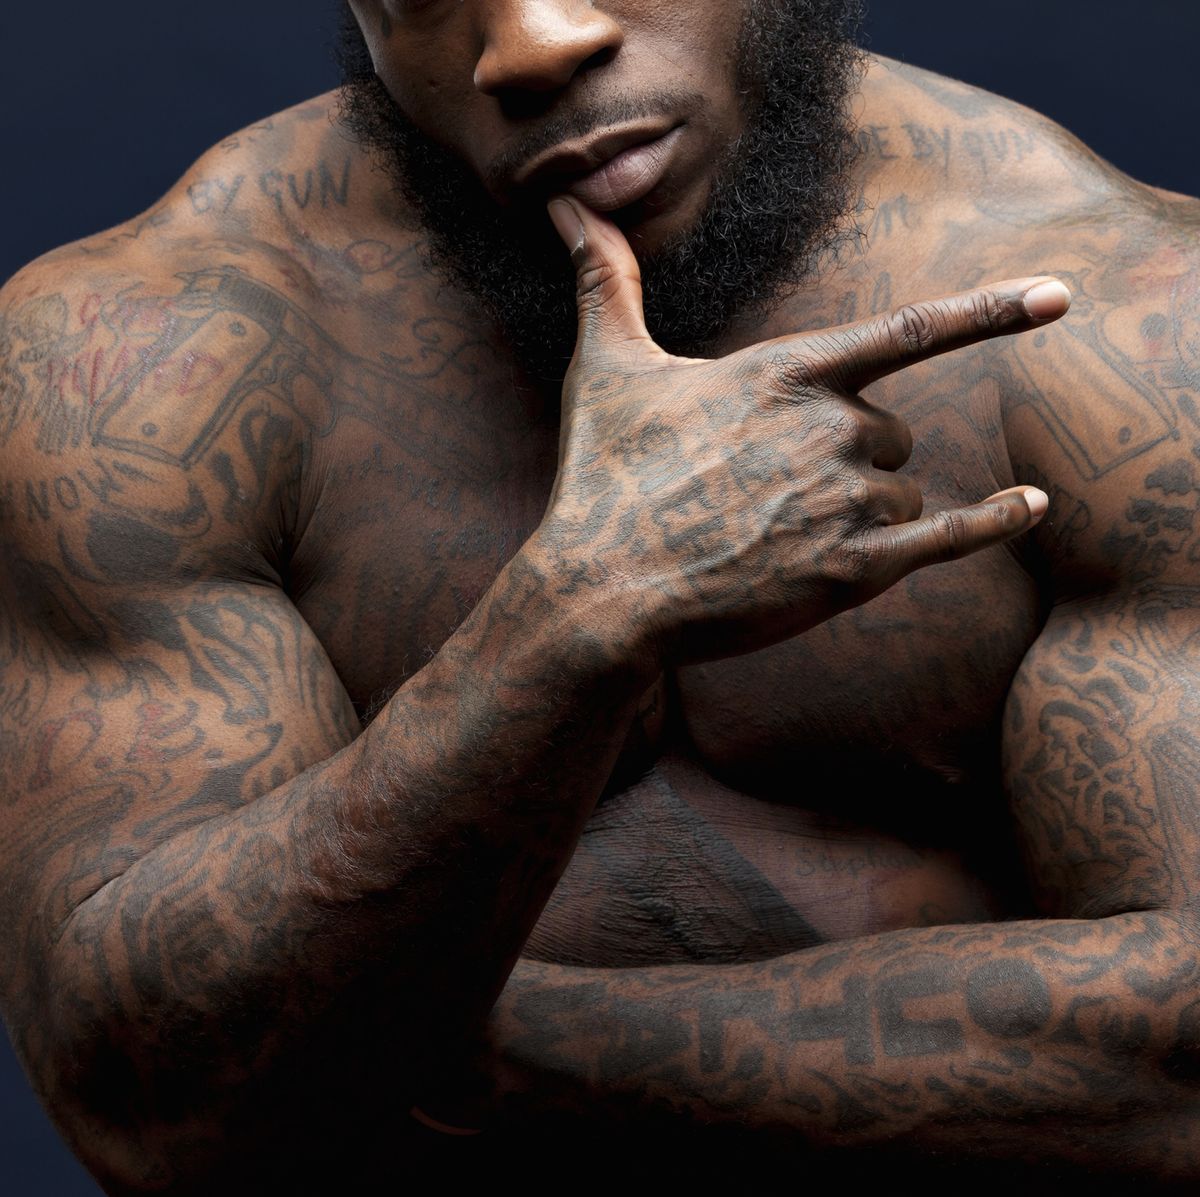 Tattoos For Dark Skin Experts Weigh In On Tattoo Myths For Darker Skin